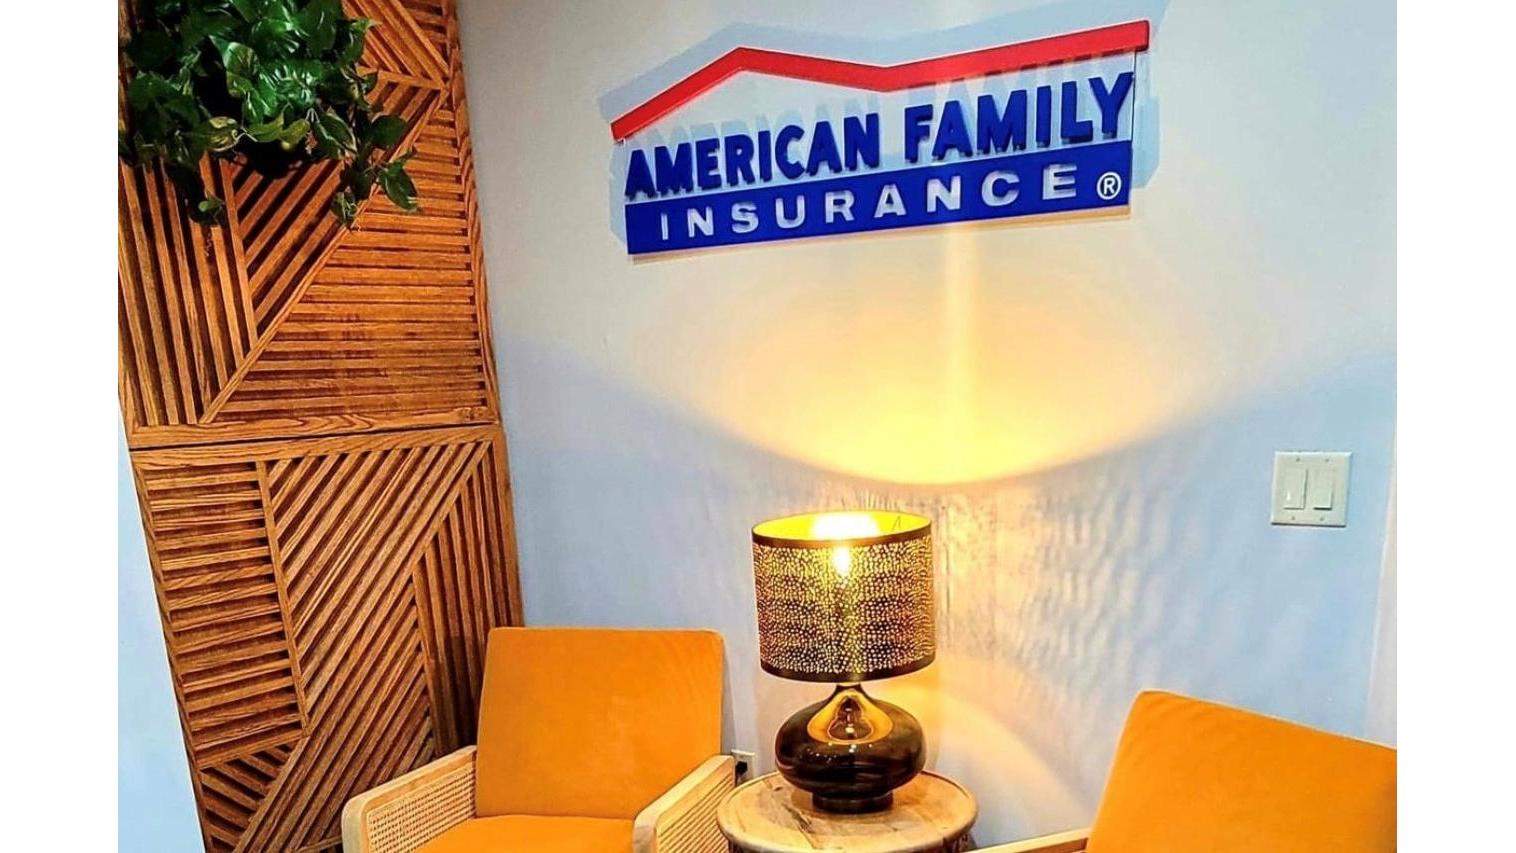 Allen & Associates, Inc. American Family Insurance